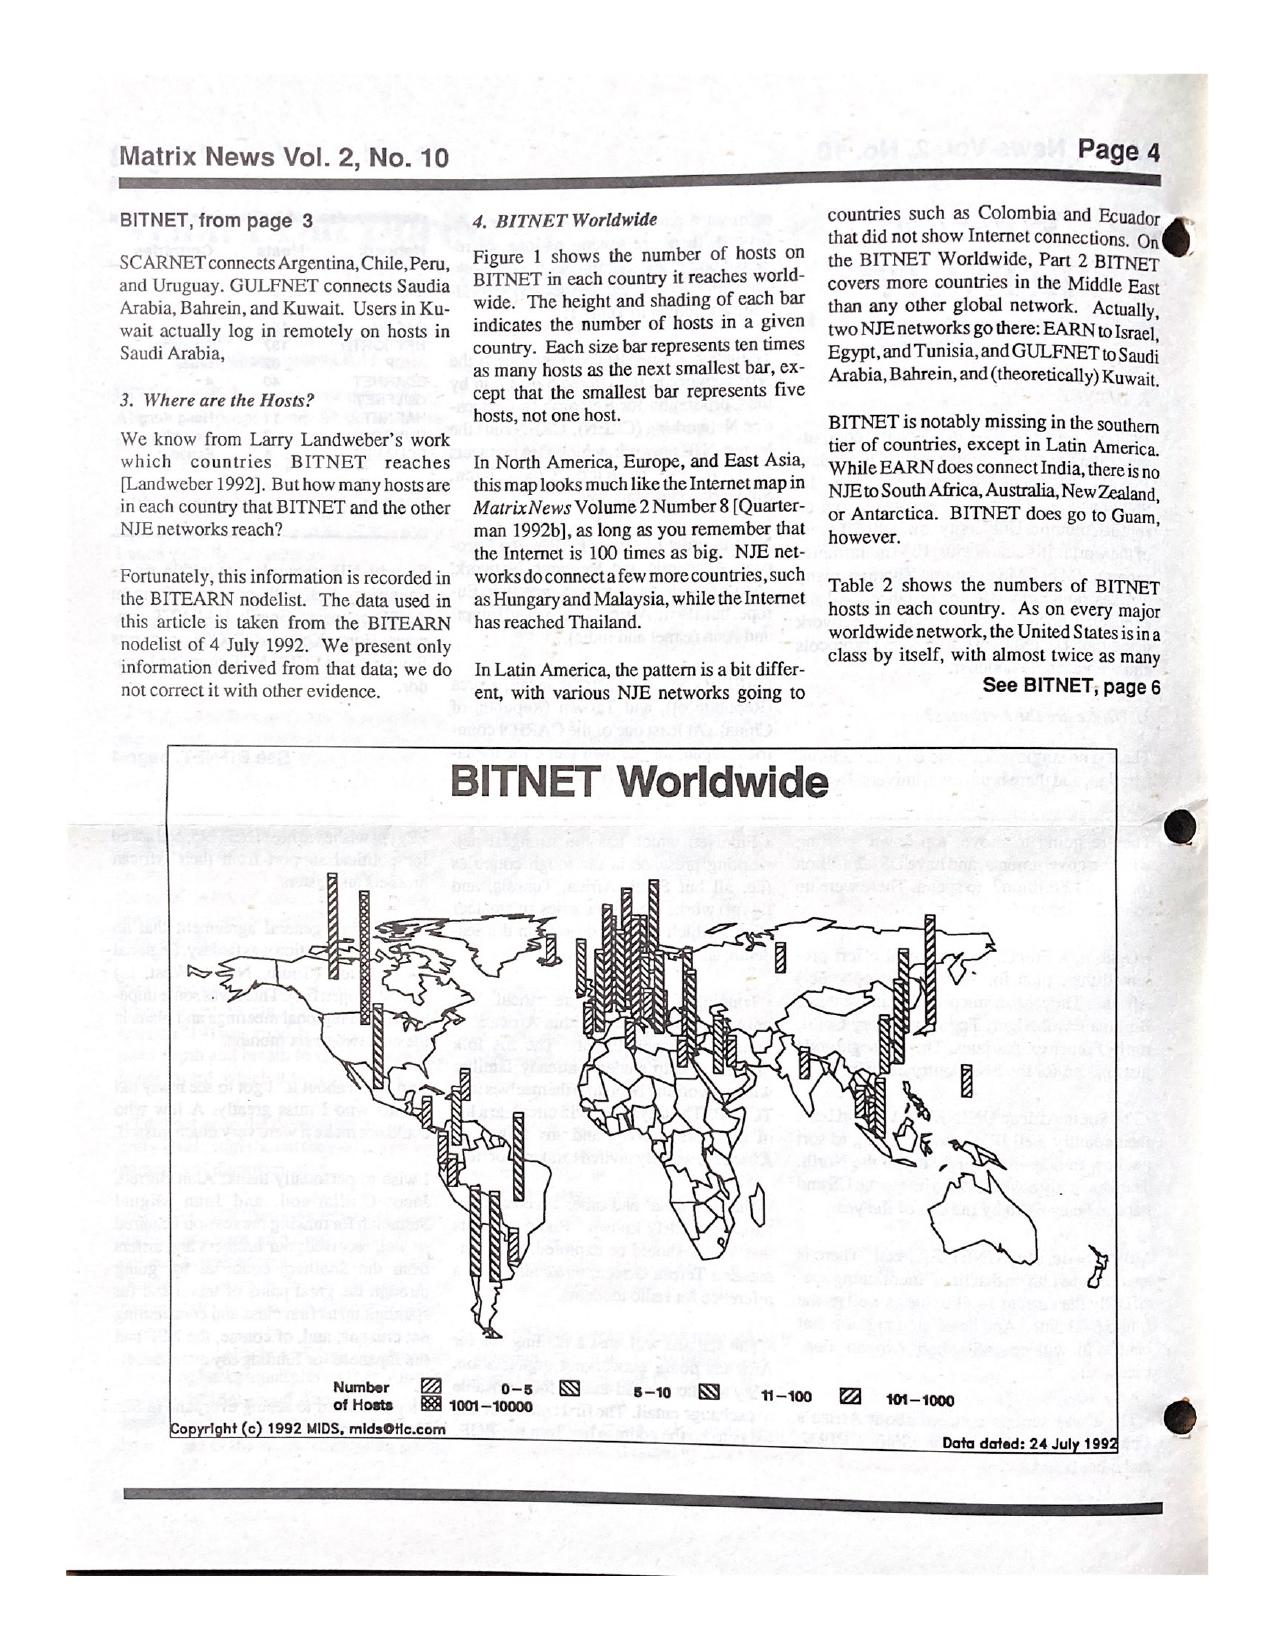 4. BITNET Worldwide by John S. Quarterman